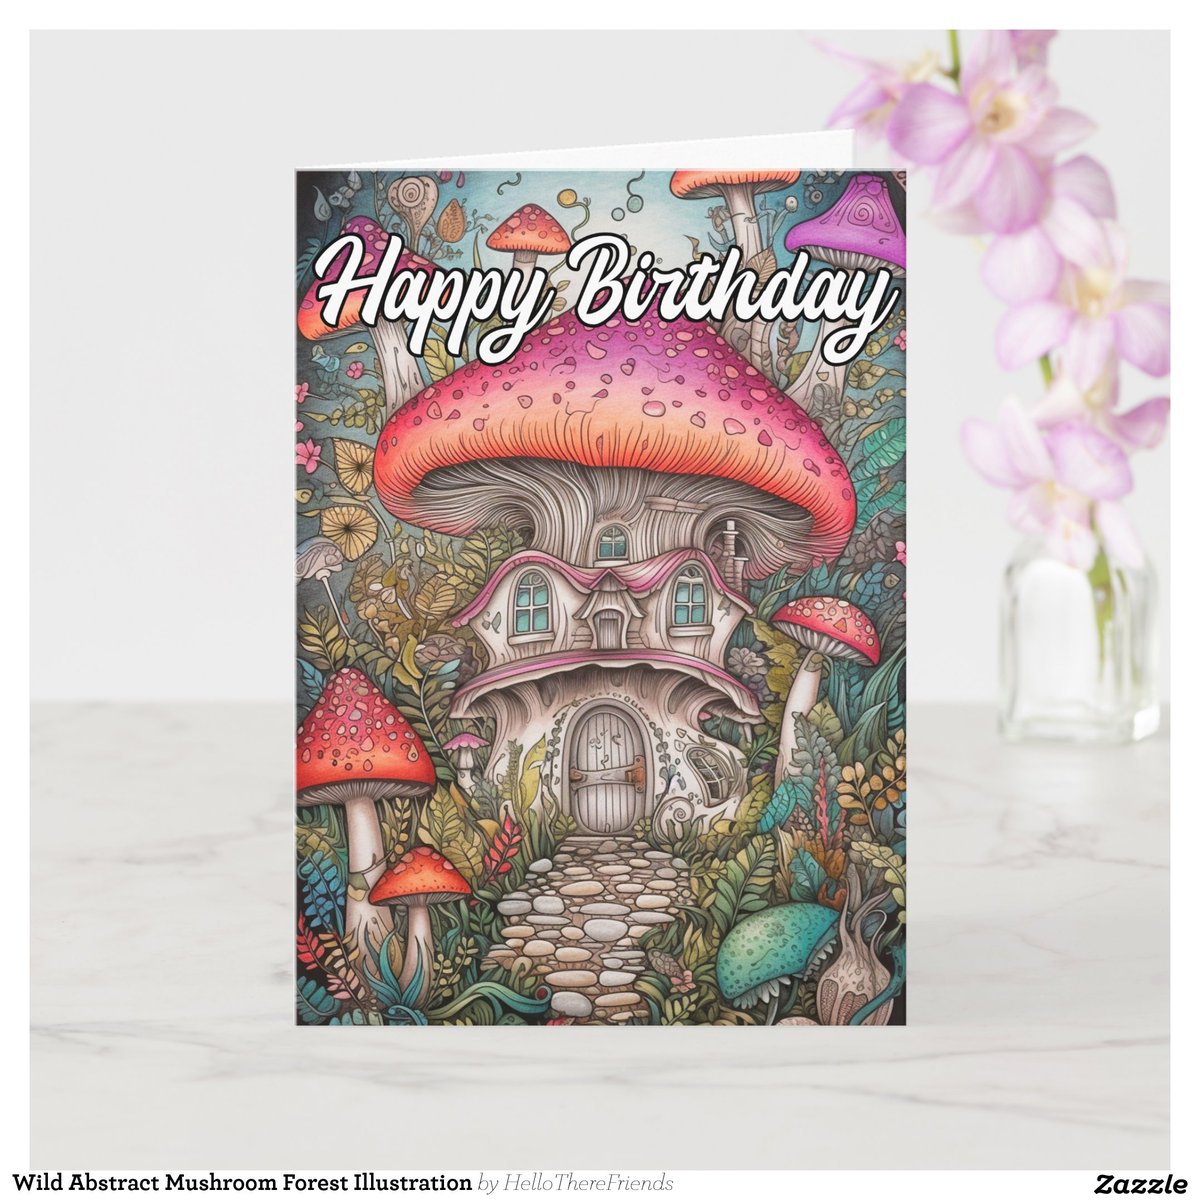 Wild Abstract Mushroom Forest Illustration Card→zazzle.com/z/236at7o7?rf=…

#BirthdayCards #GreetingCards #HappyBirthday #PsychedelicMushrooms #MushroomArt #MushroomIllustration #Mushrooms #Stationery #Cards #Zazzle